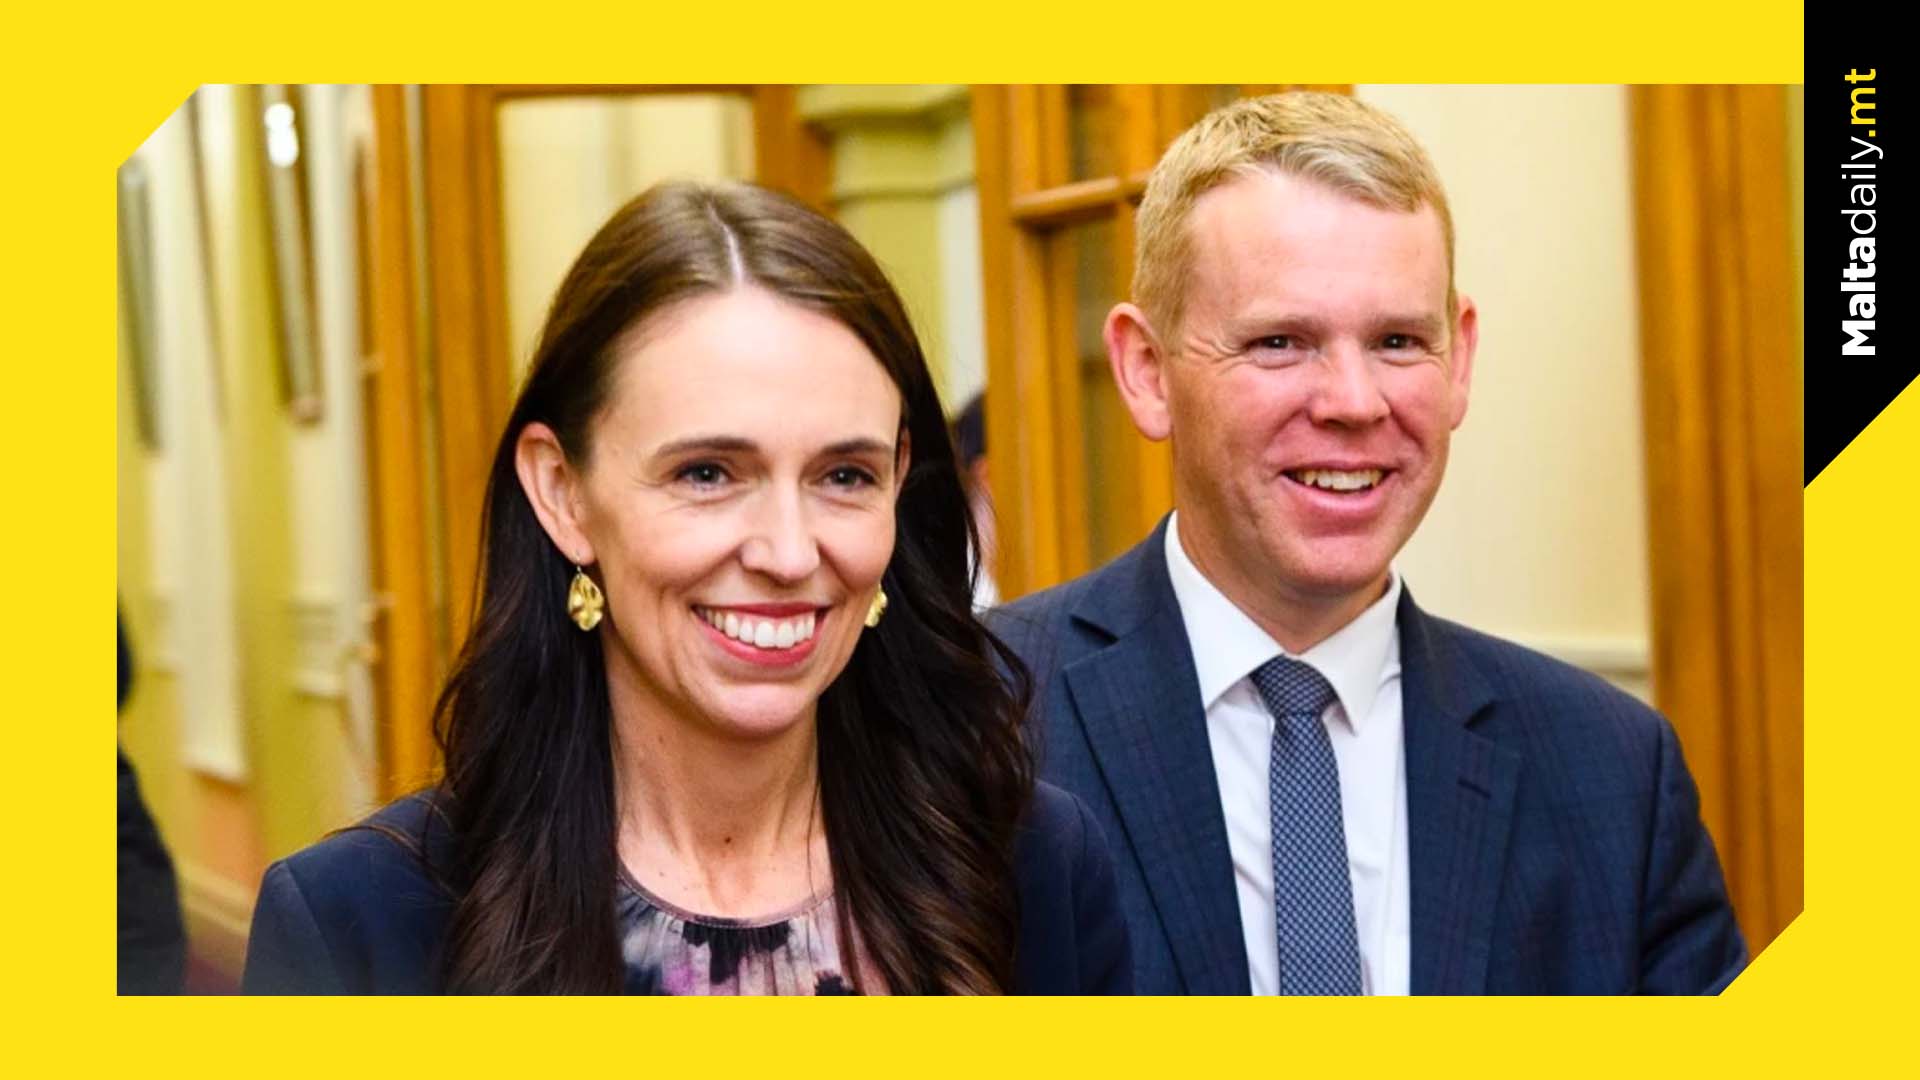 Chris Hipkins replaces Jacinda Ardern as New Zealand Prime Minister